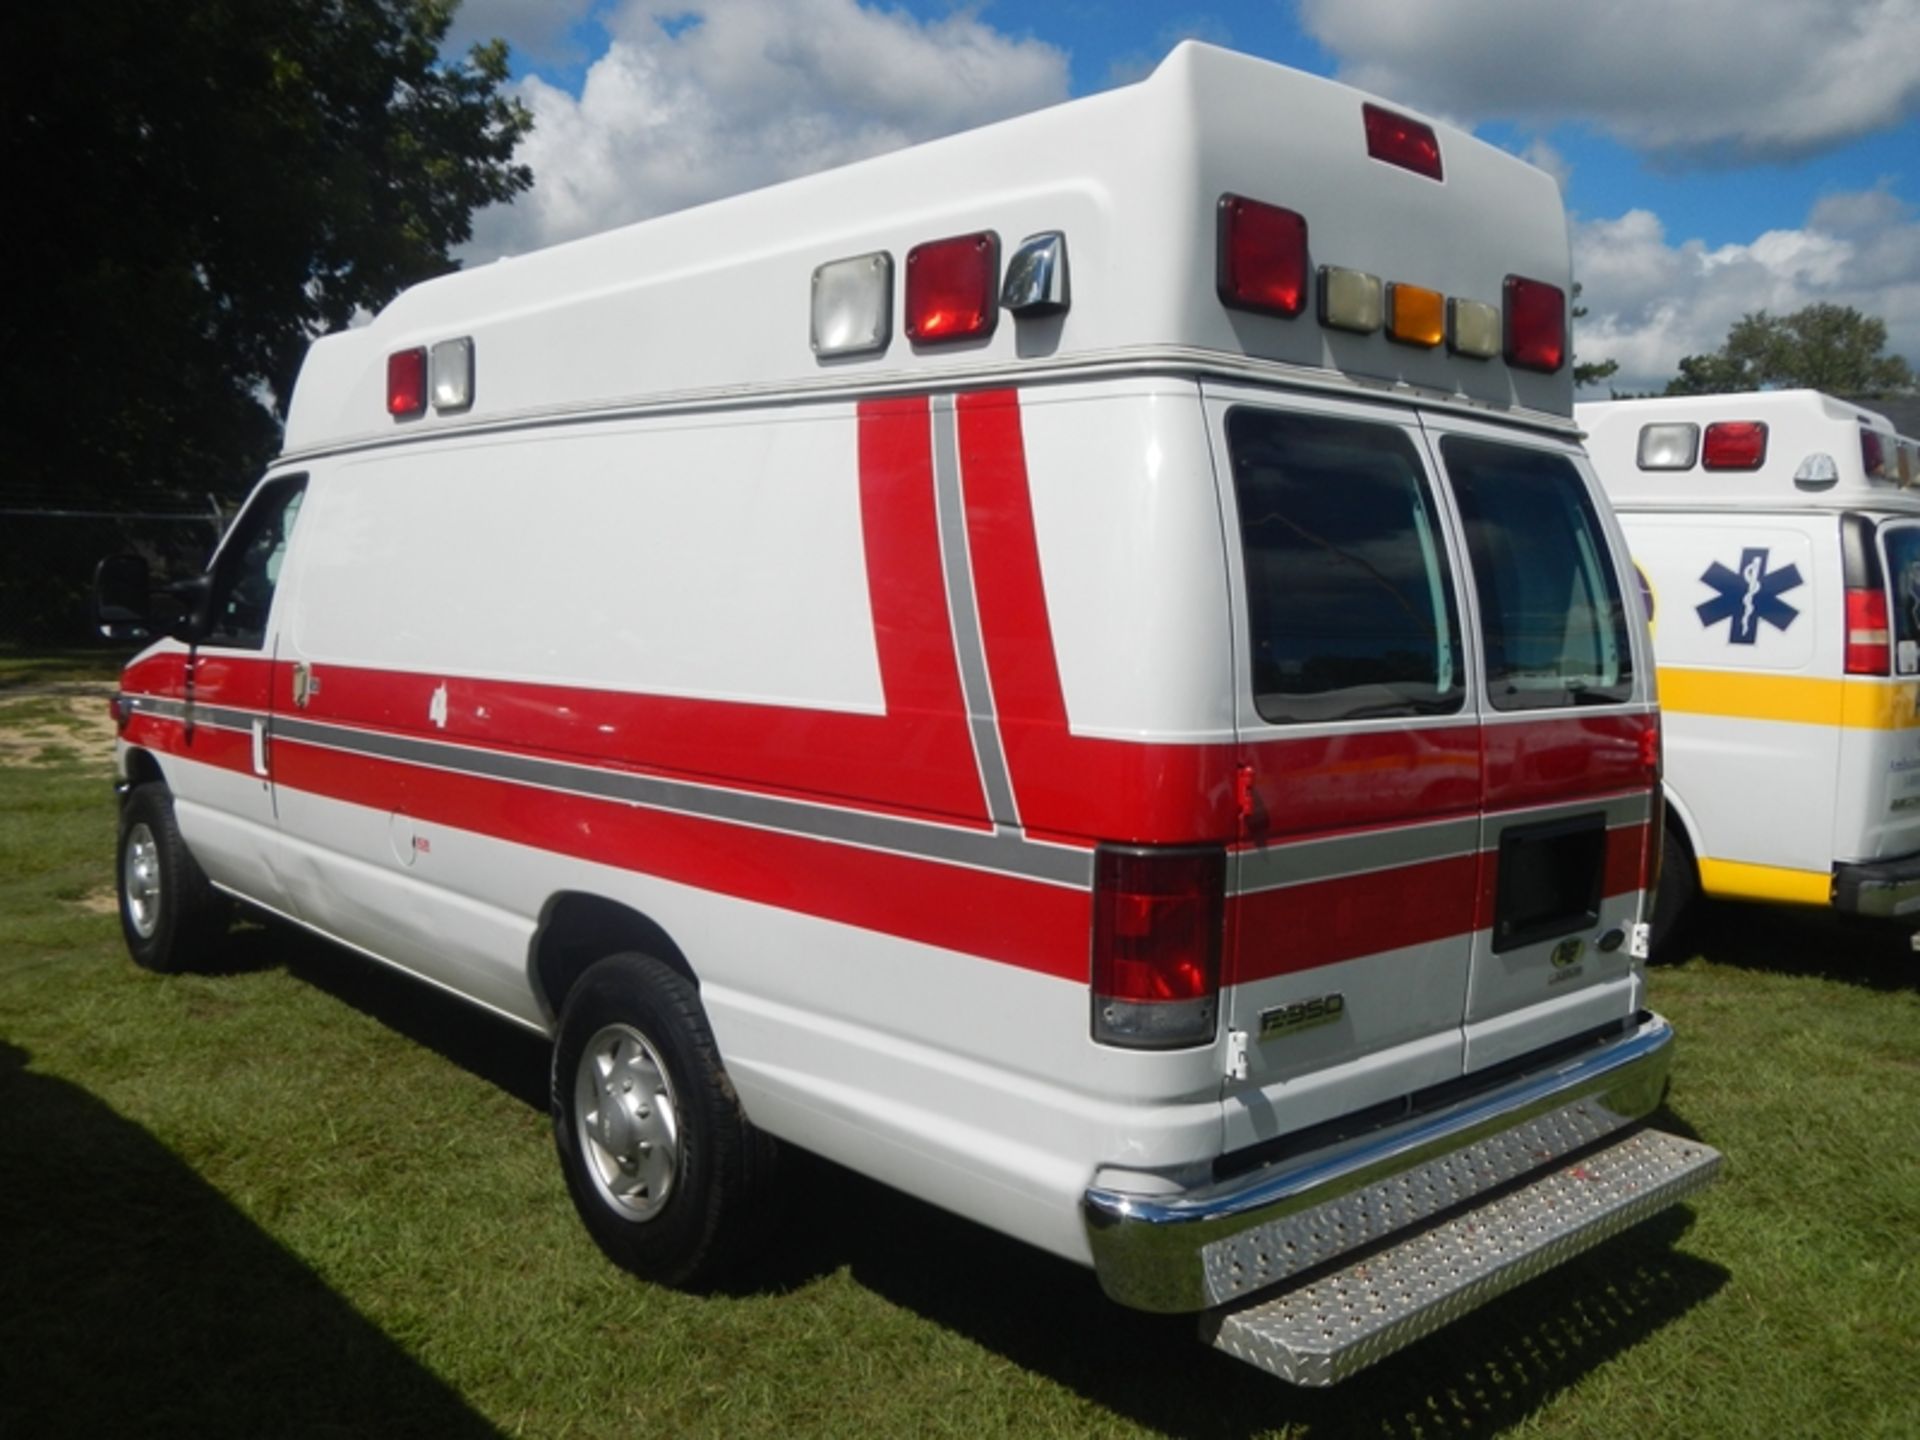 2010 FORD E-350 Super Duty Type II Ambulance, dsl 248,059 miles - VIN: 1FDSS3EP8ADA23977 - Image 4 of 6